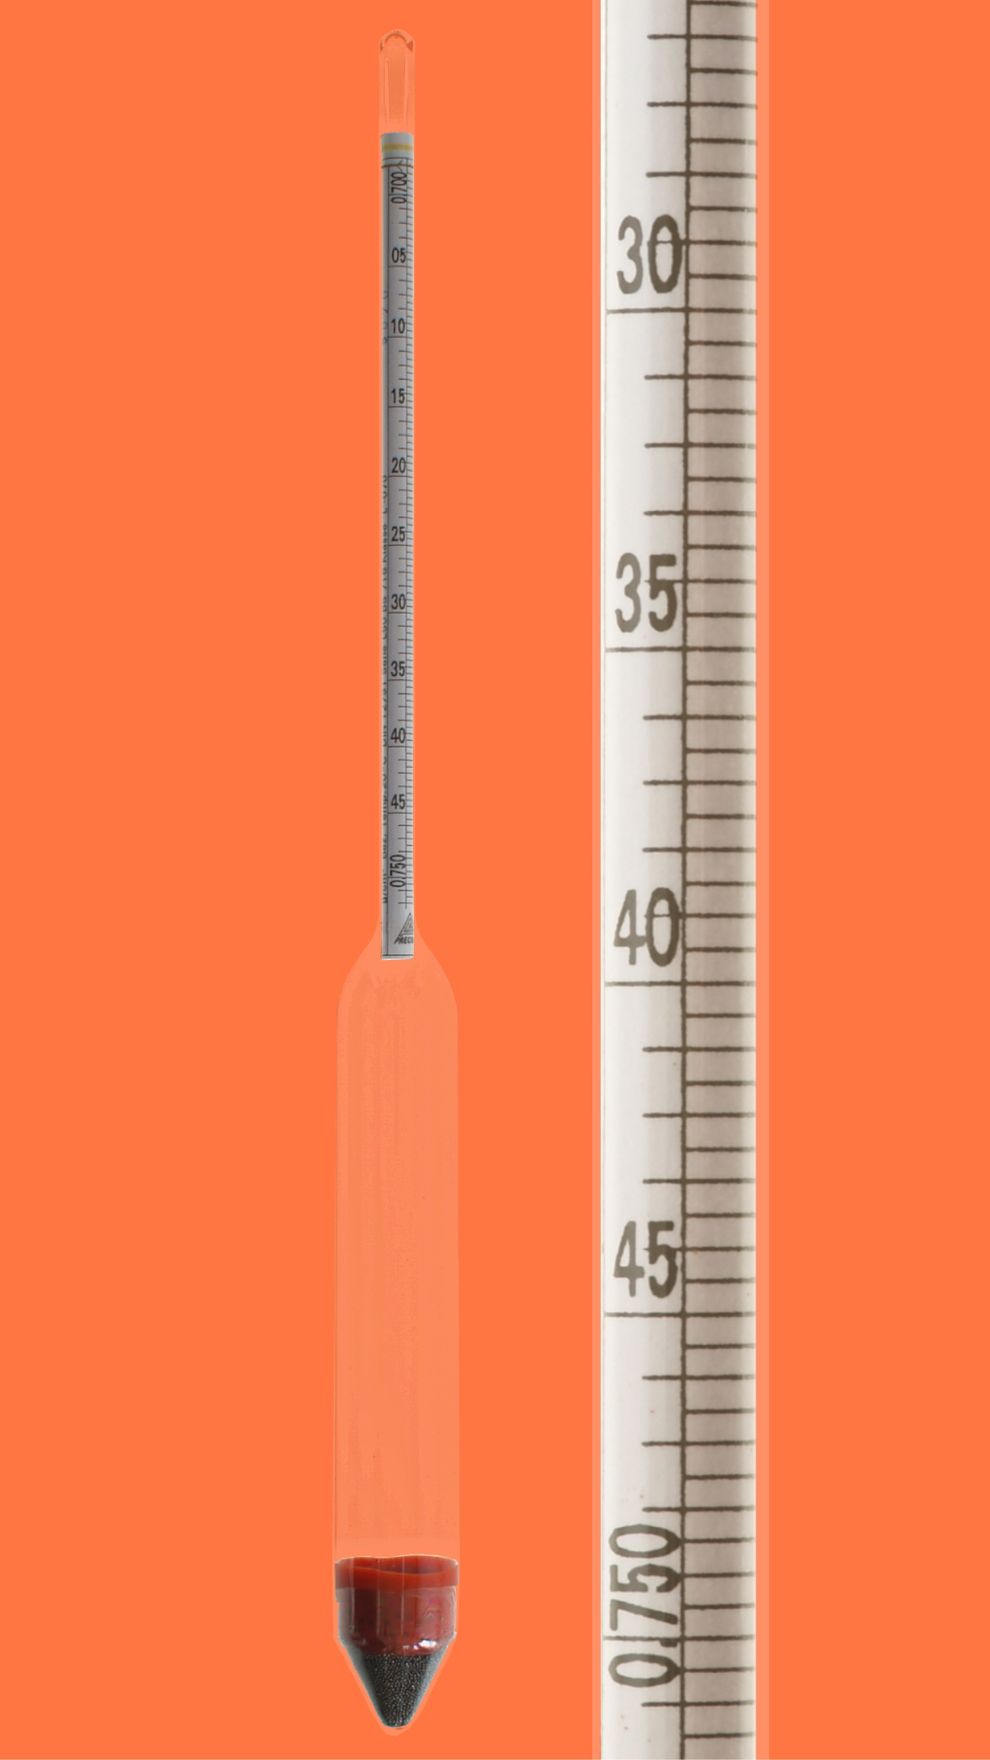 Aräometer, DIN 12791, L50, 1,40-1,45:0,0005g/cm³, Bezugstemp. 20°C, ohne Thermometer